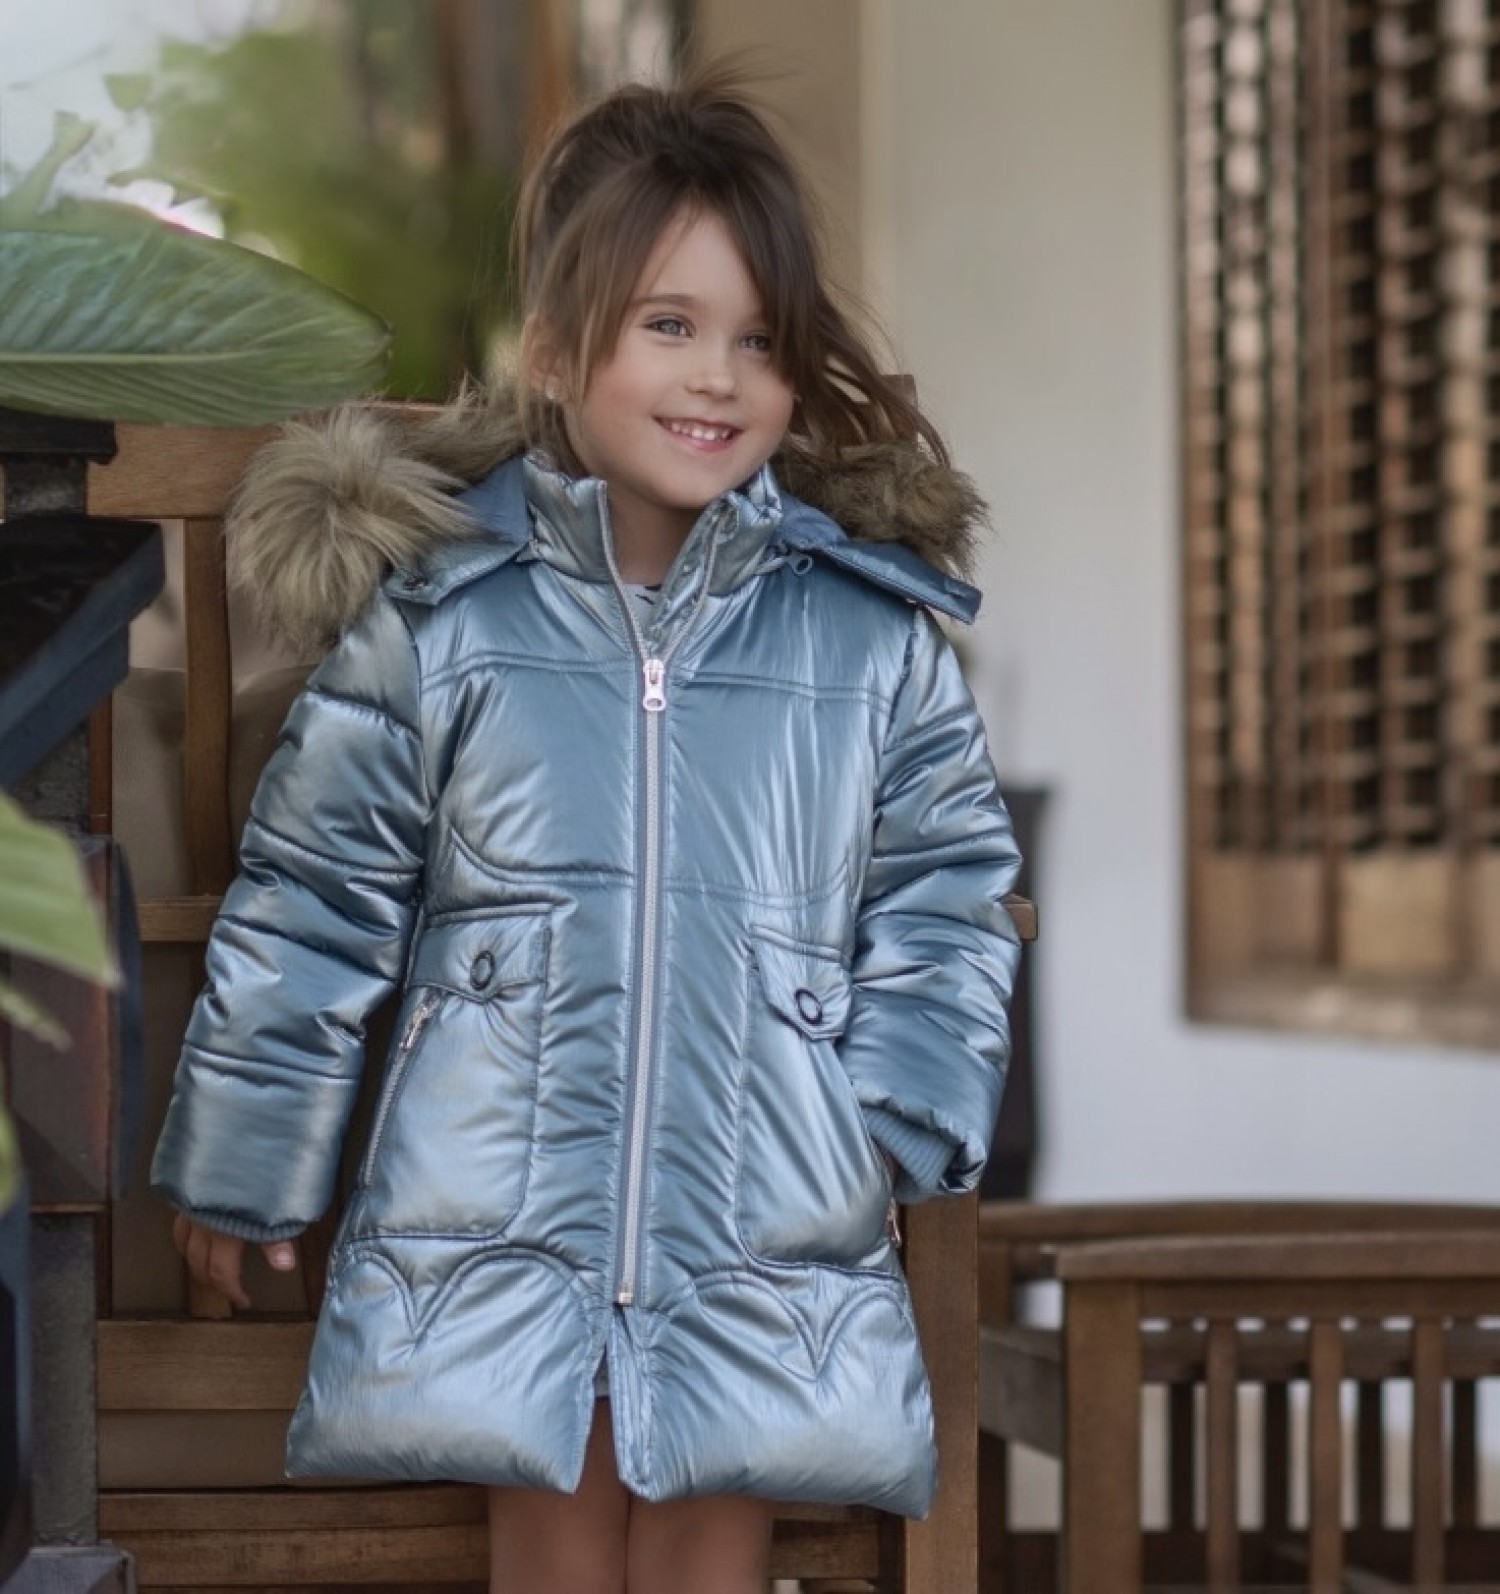 Abrigo azul metalizado para niña